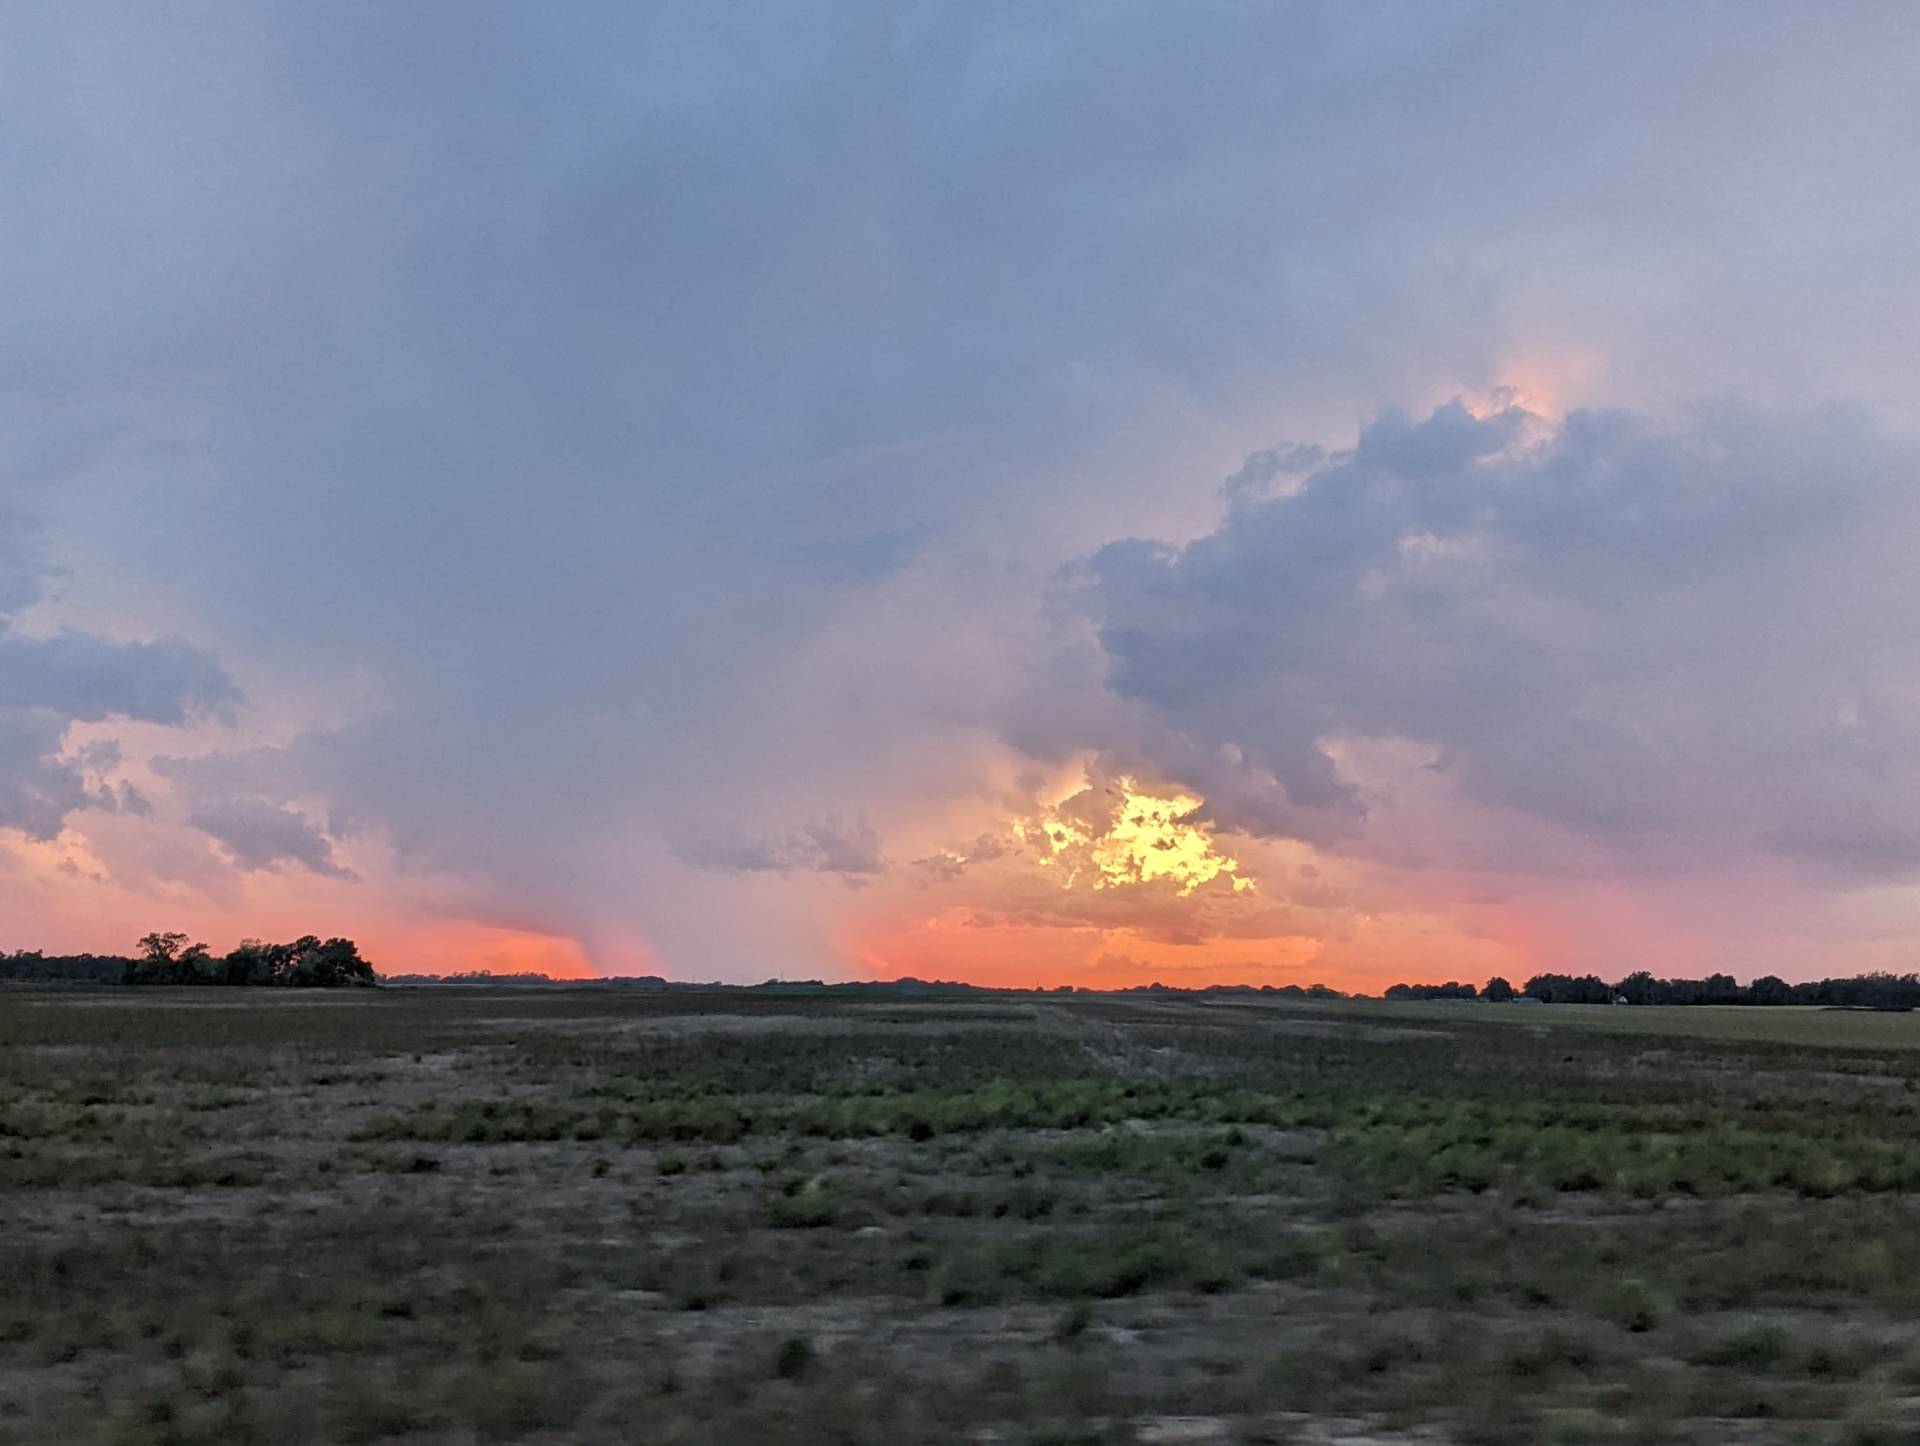 Pretty sunset near Stafford, Kansas. #kswx